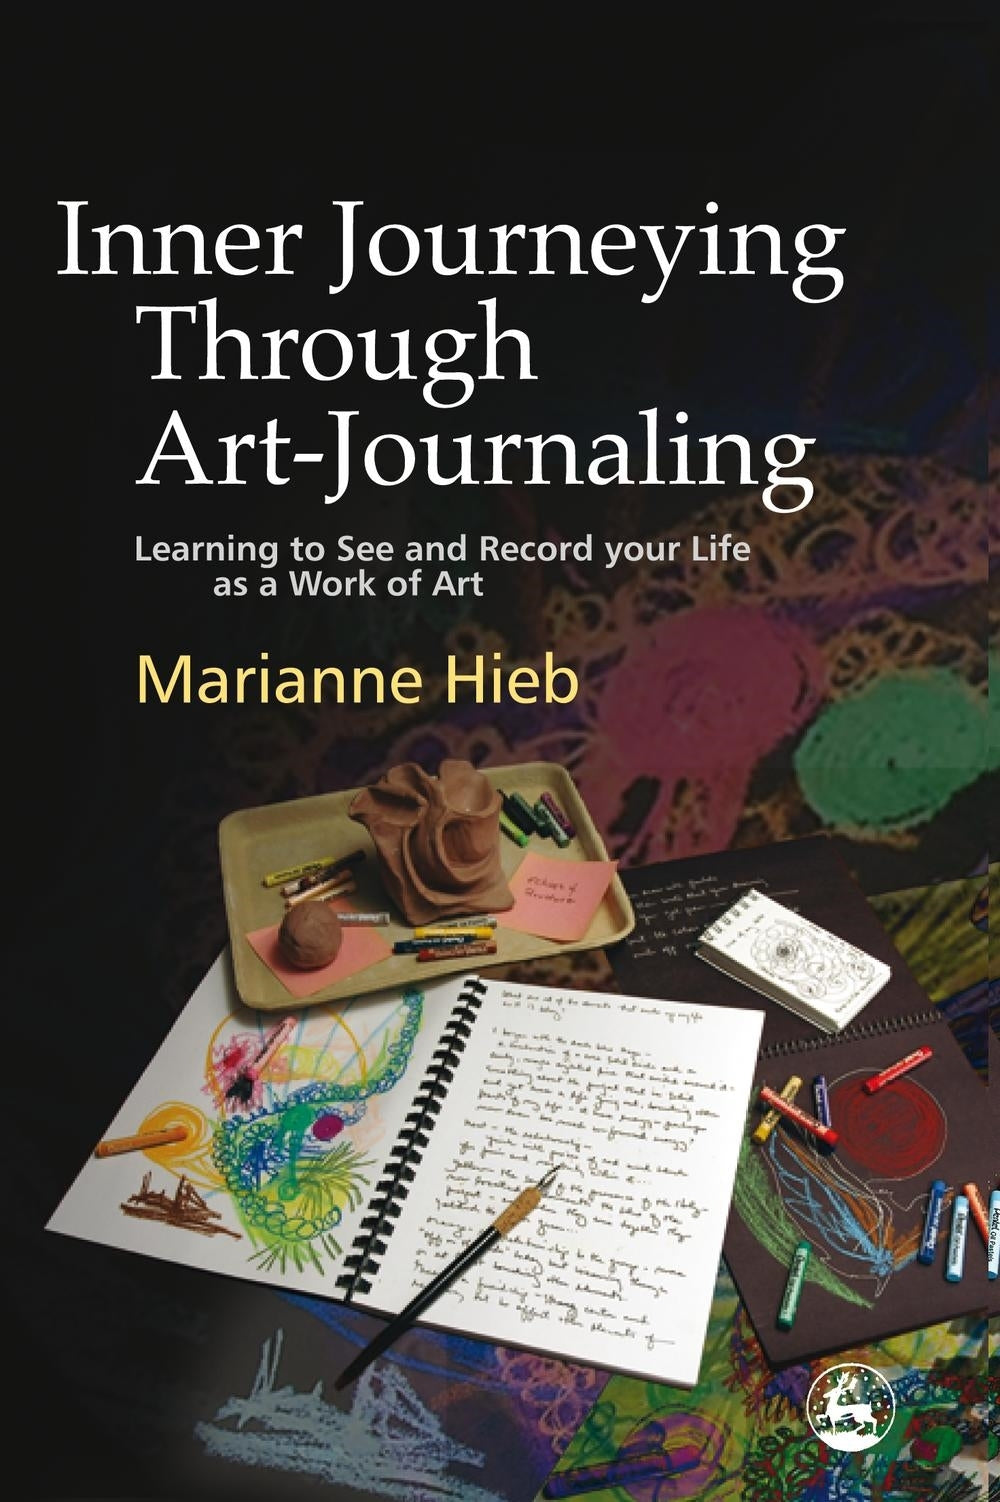 Inner Journeying Through Art-Journaling by Marianne Hieb